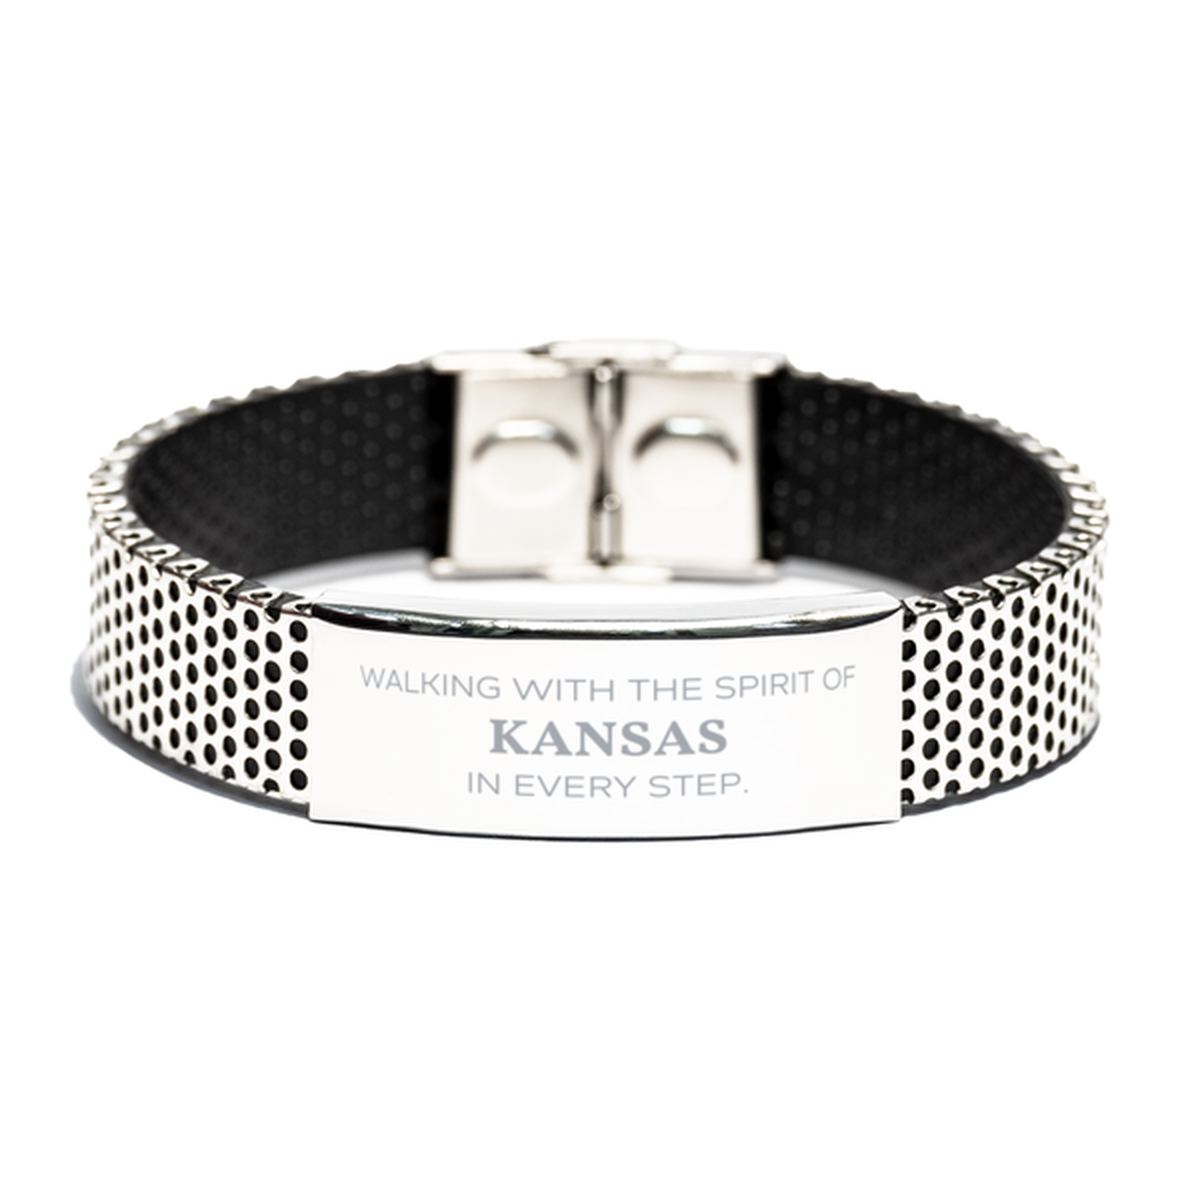 Kansas Gifts, Walking with the spirit, Love Kansas Birthday Christmas Stainless Steel Bracelet For Kansas People, Men, Women, Friends